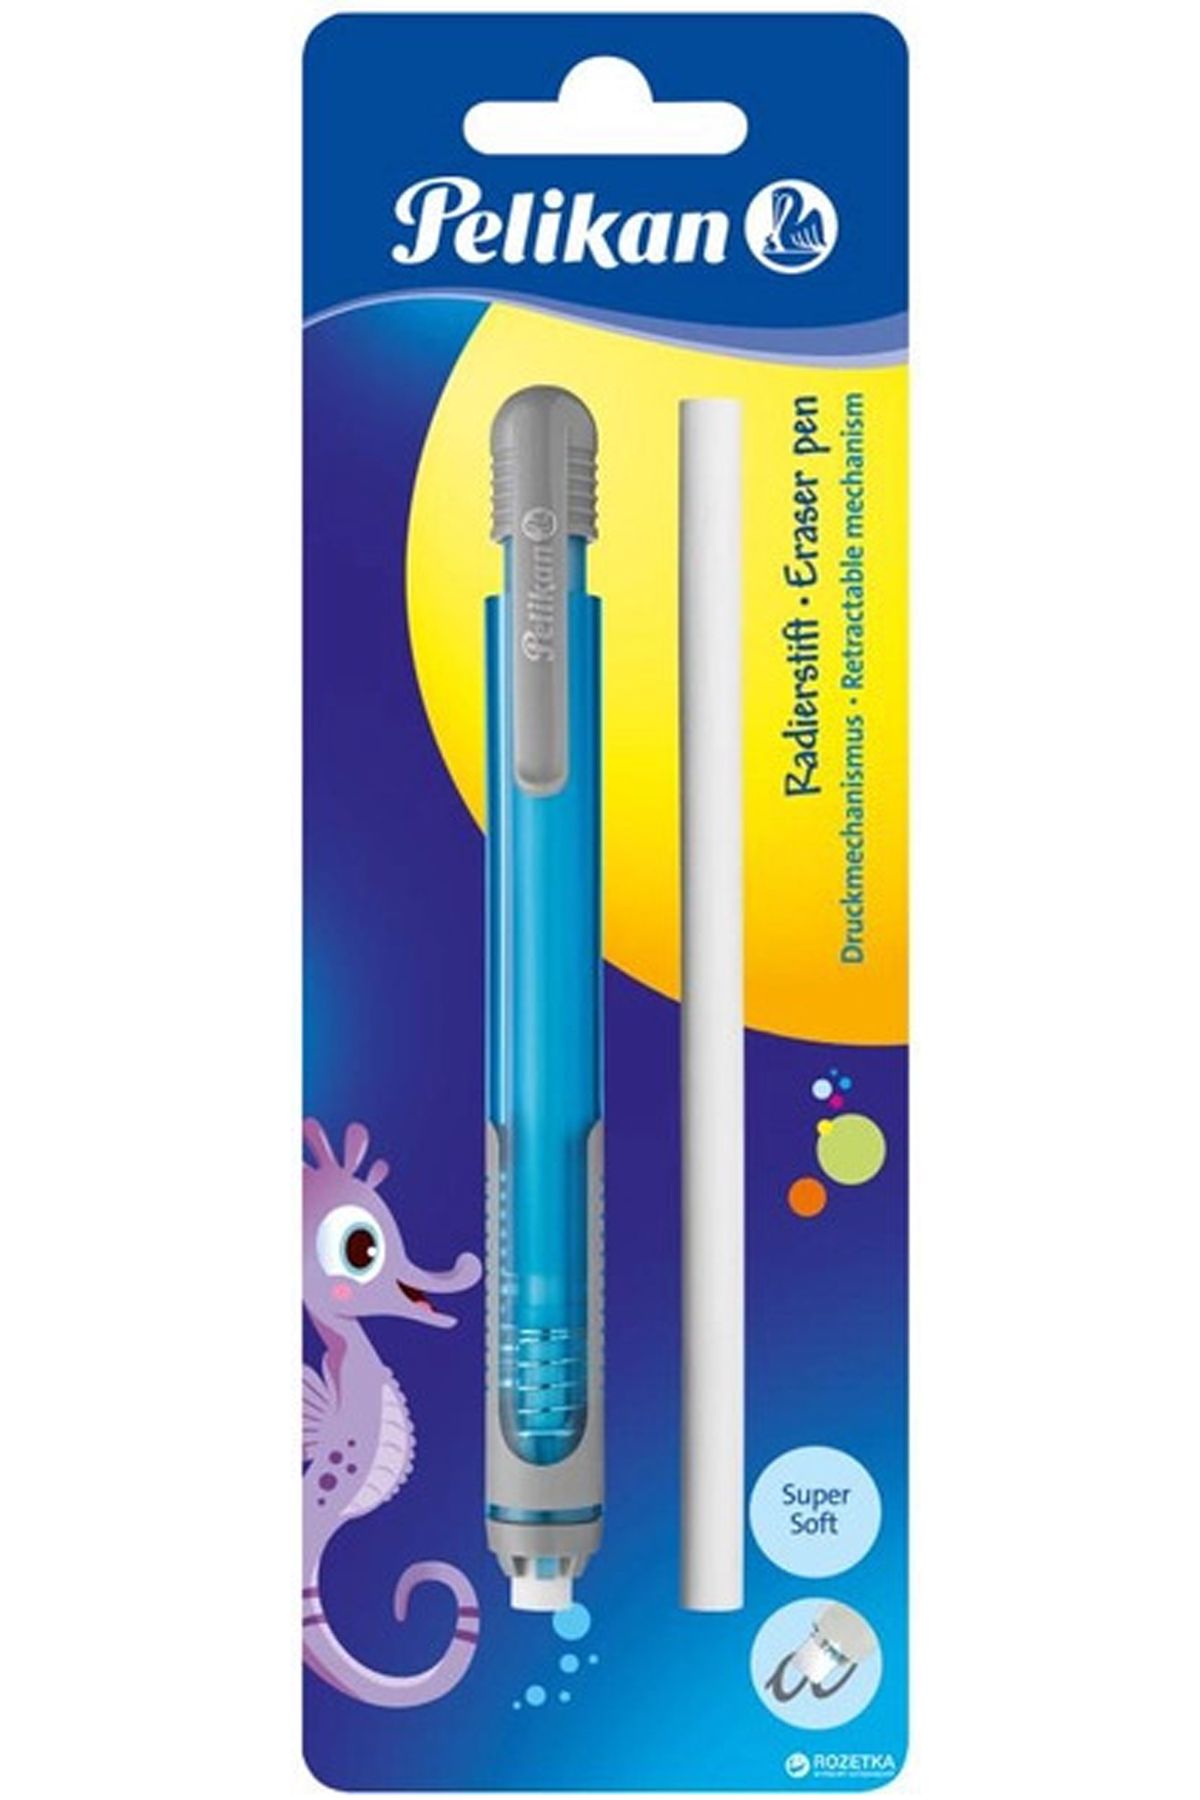 Pelikan mavi kalem tipi silgi(kalem silgi) + yedek silgi